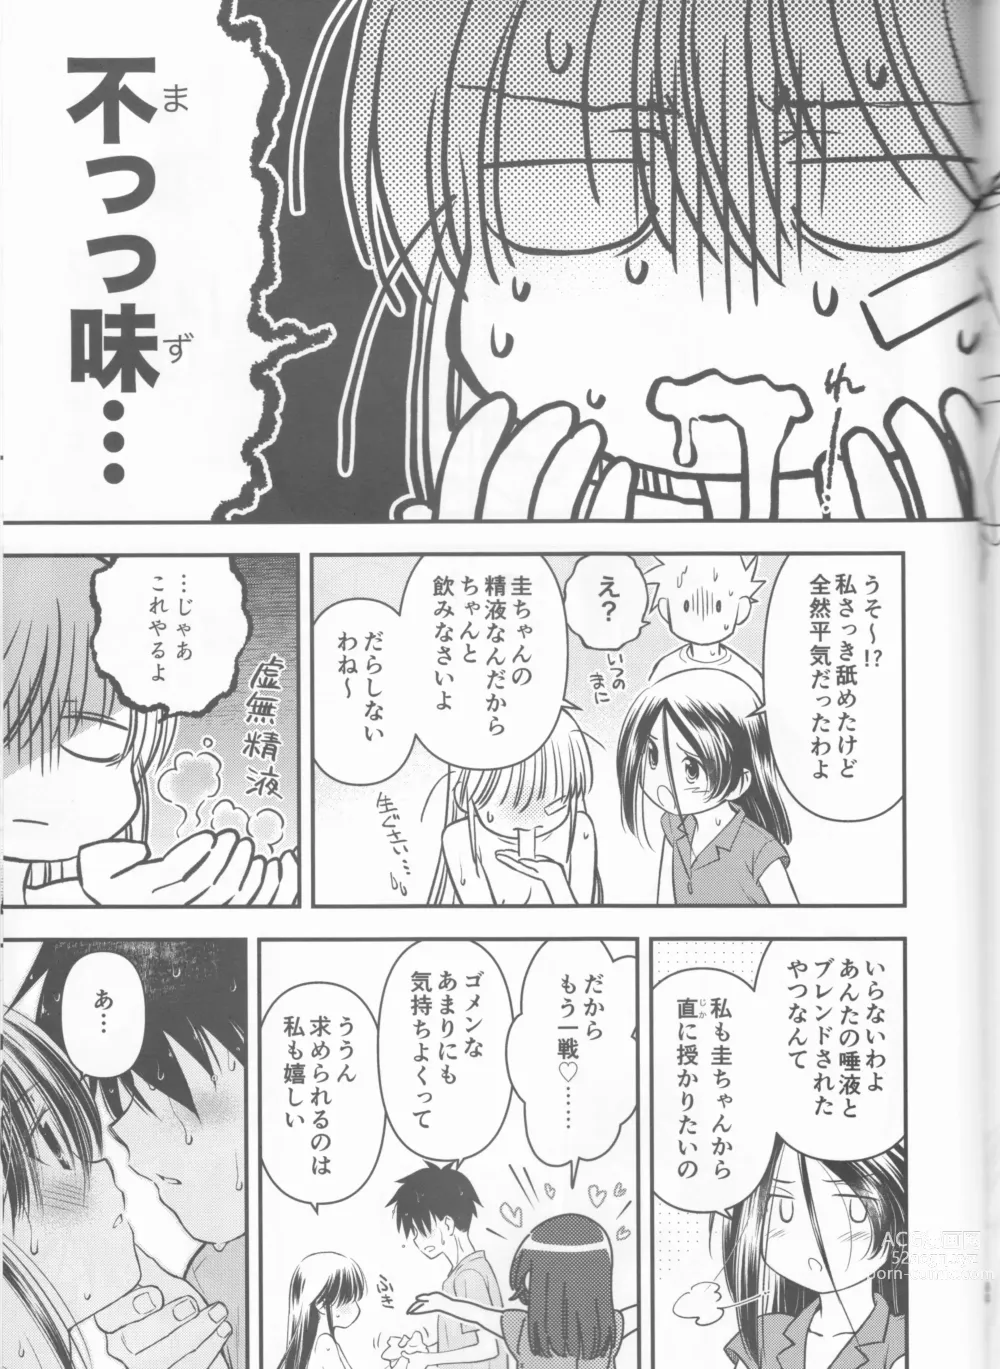 Page 66 of doujinshi kxs.